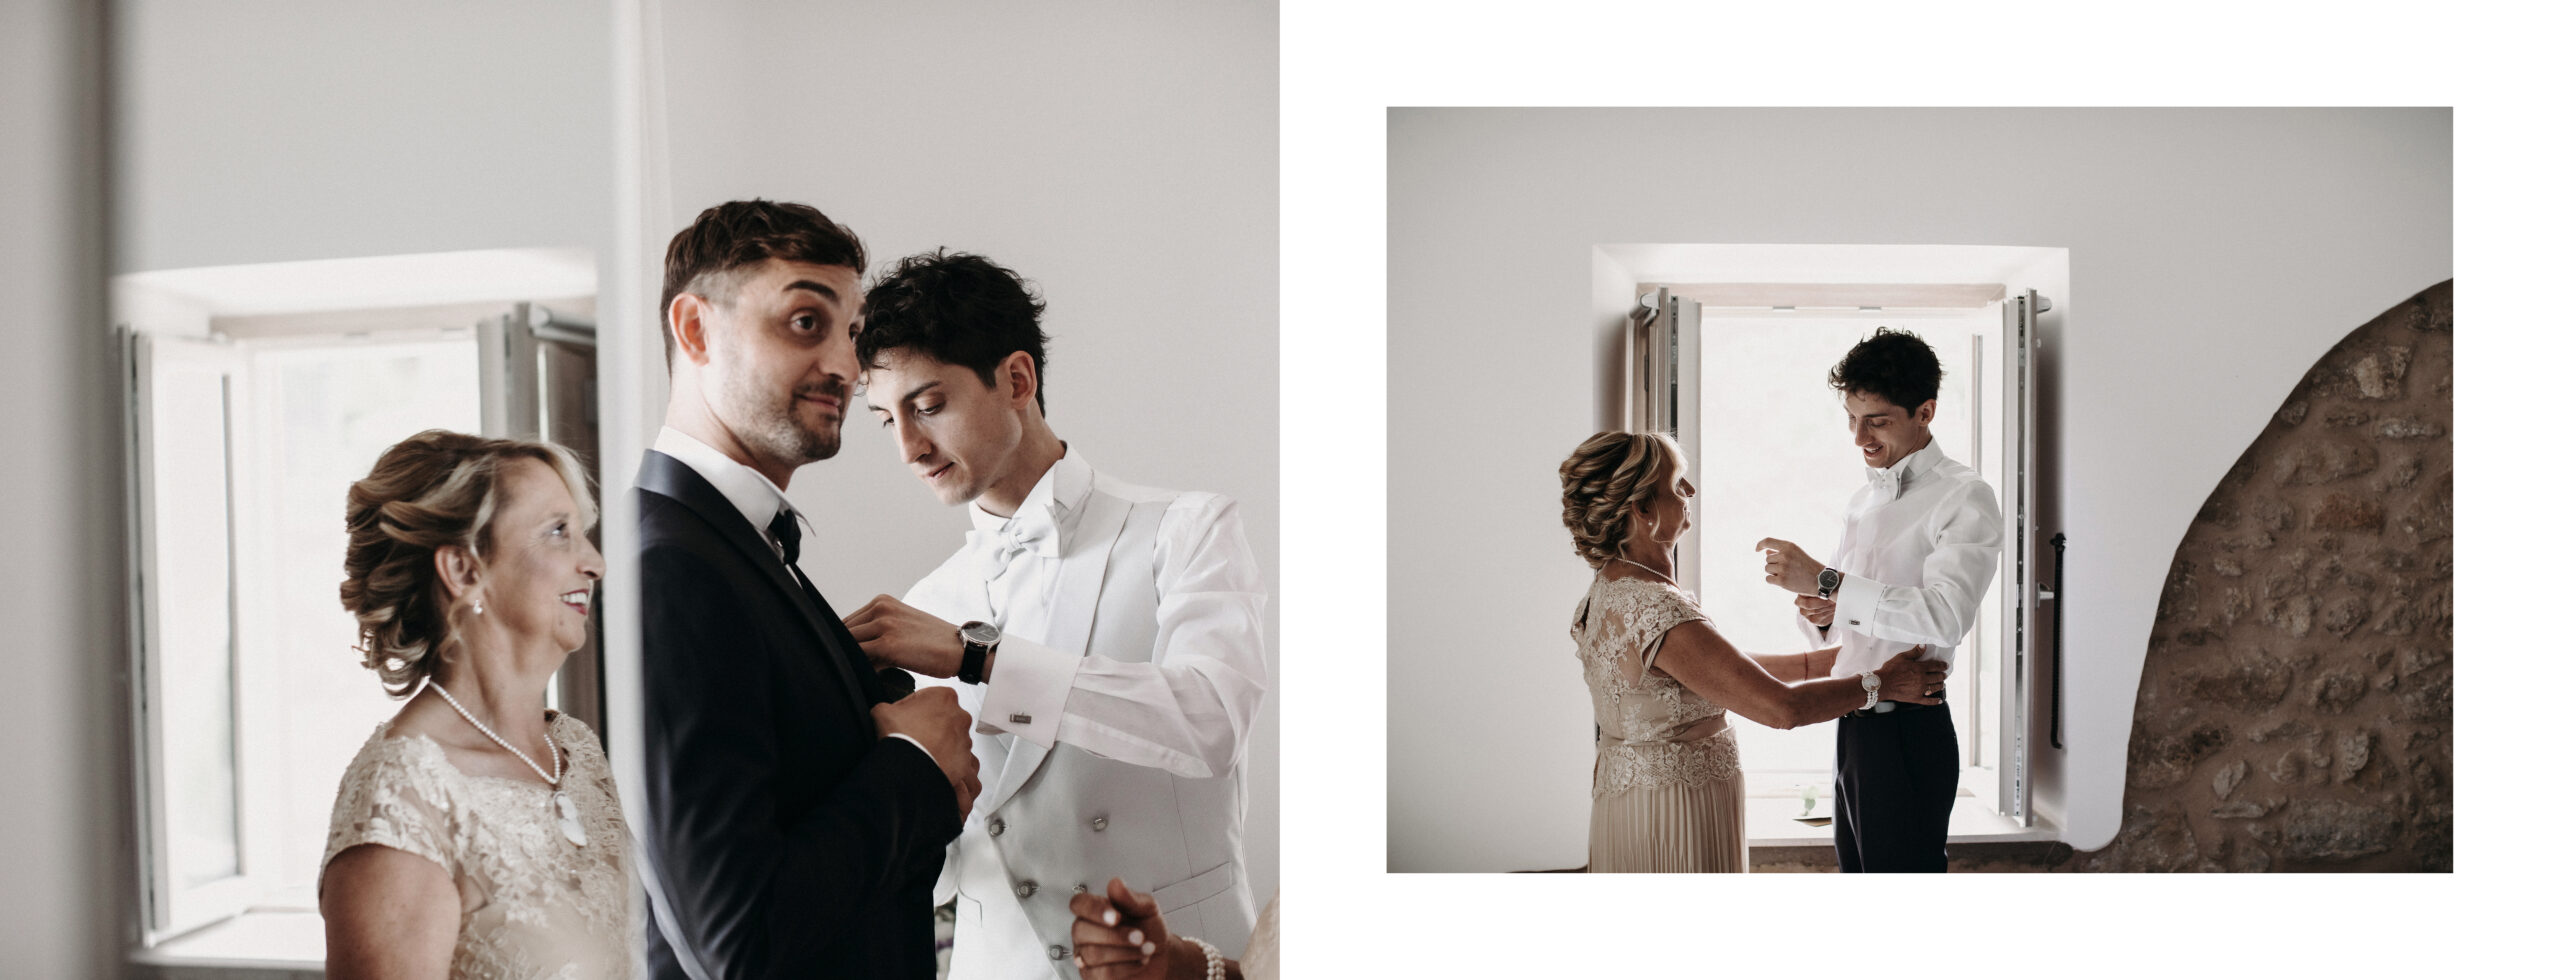 fotografo matrimonio catania, real wedding, fotografo catania